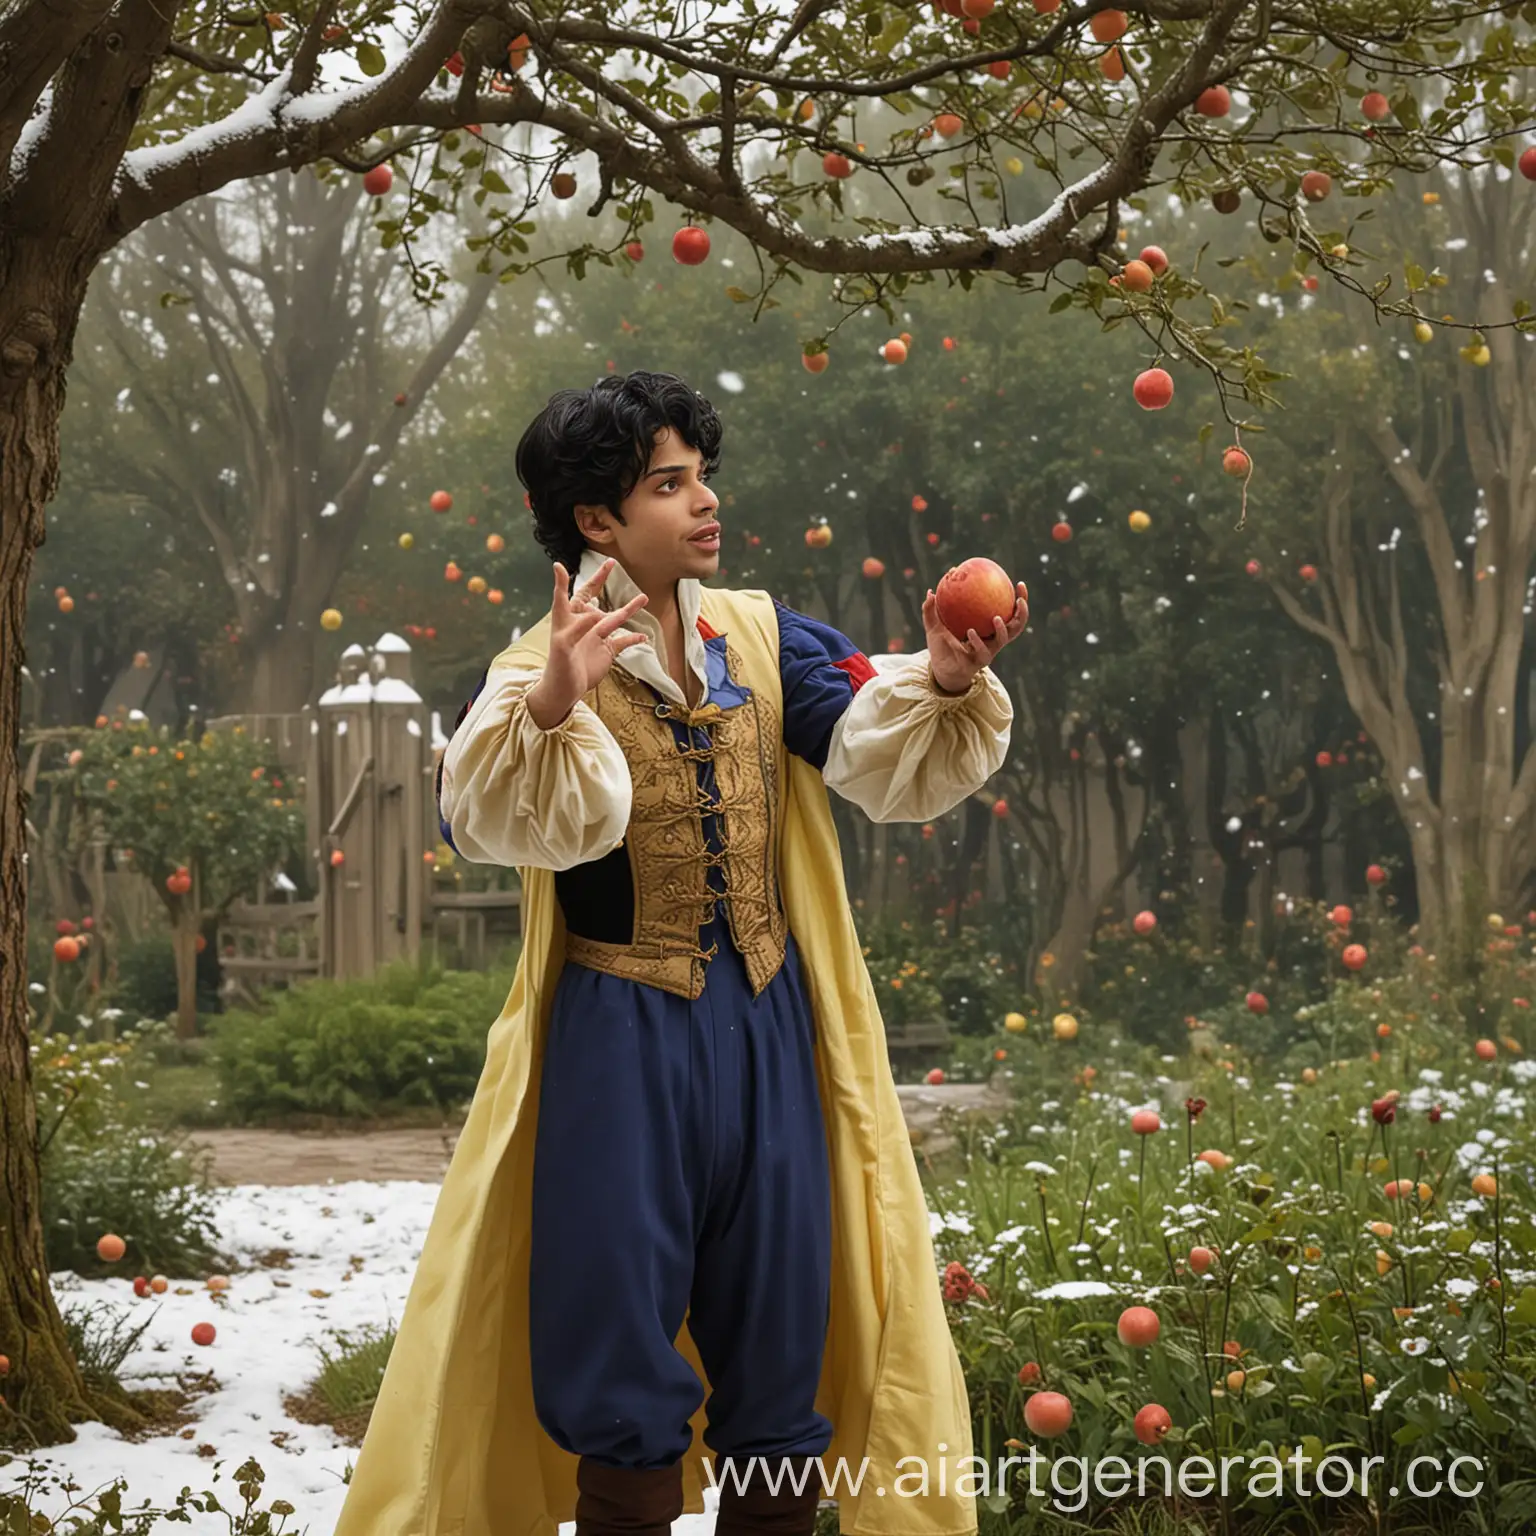 Prince-Throwing-Apple-in-Snow-Whites-Enchanted-Garden